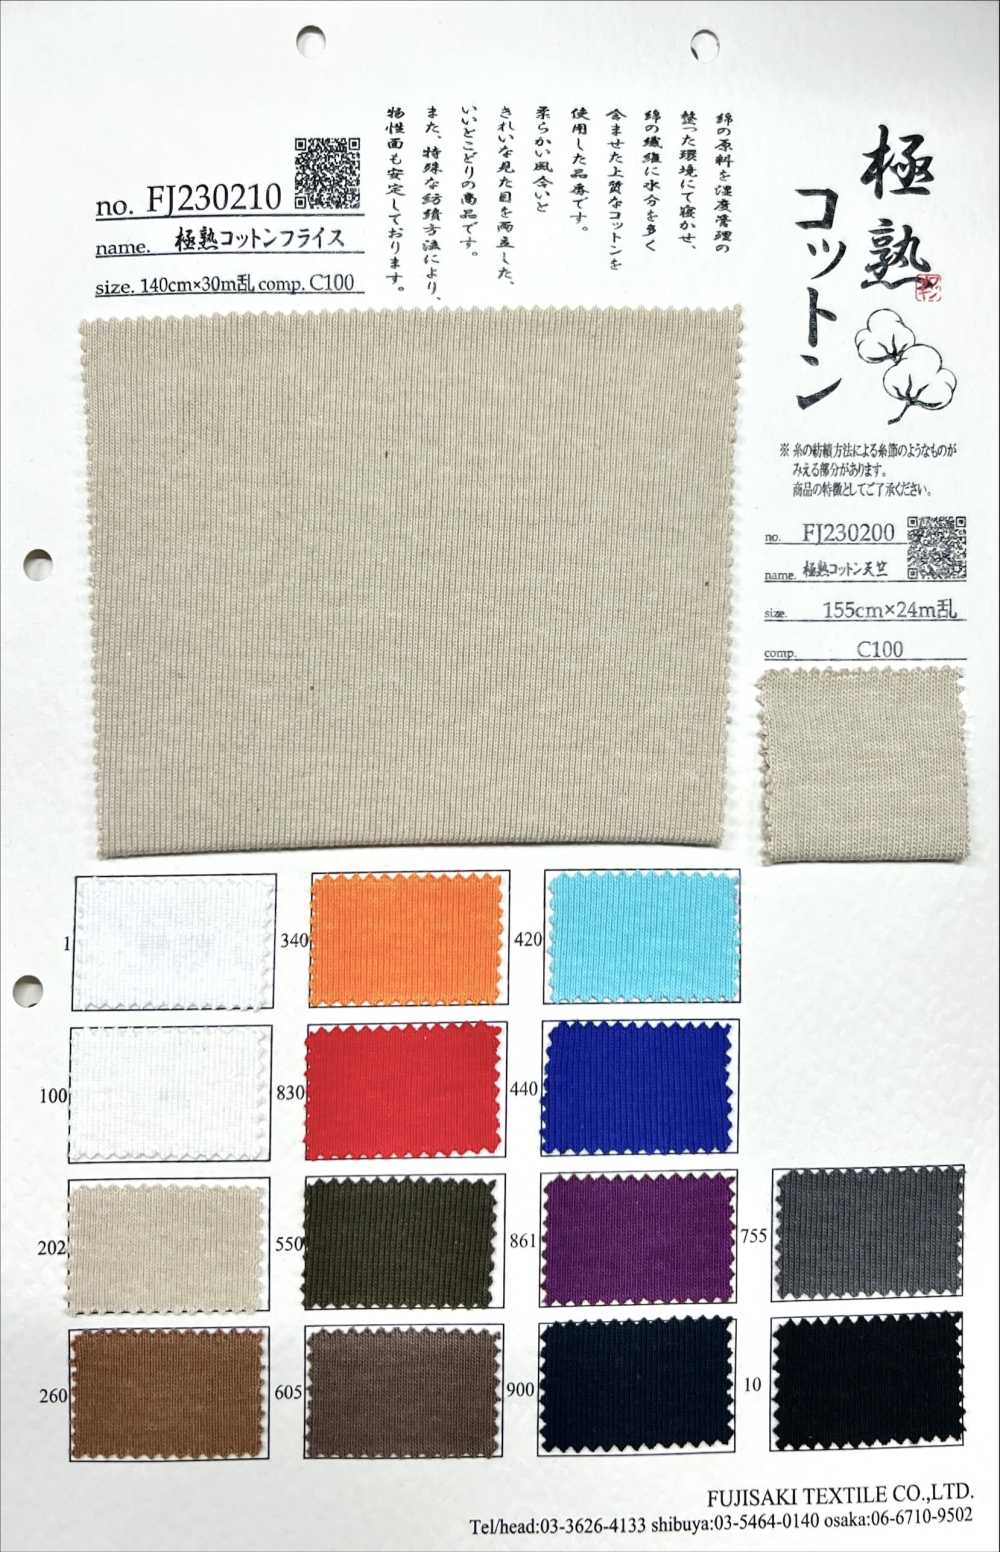 FJ230210 极其成熟的棉花针织罗纹[面料] Fujisaki Textile